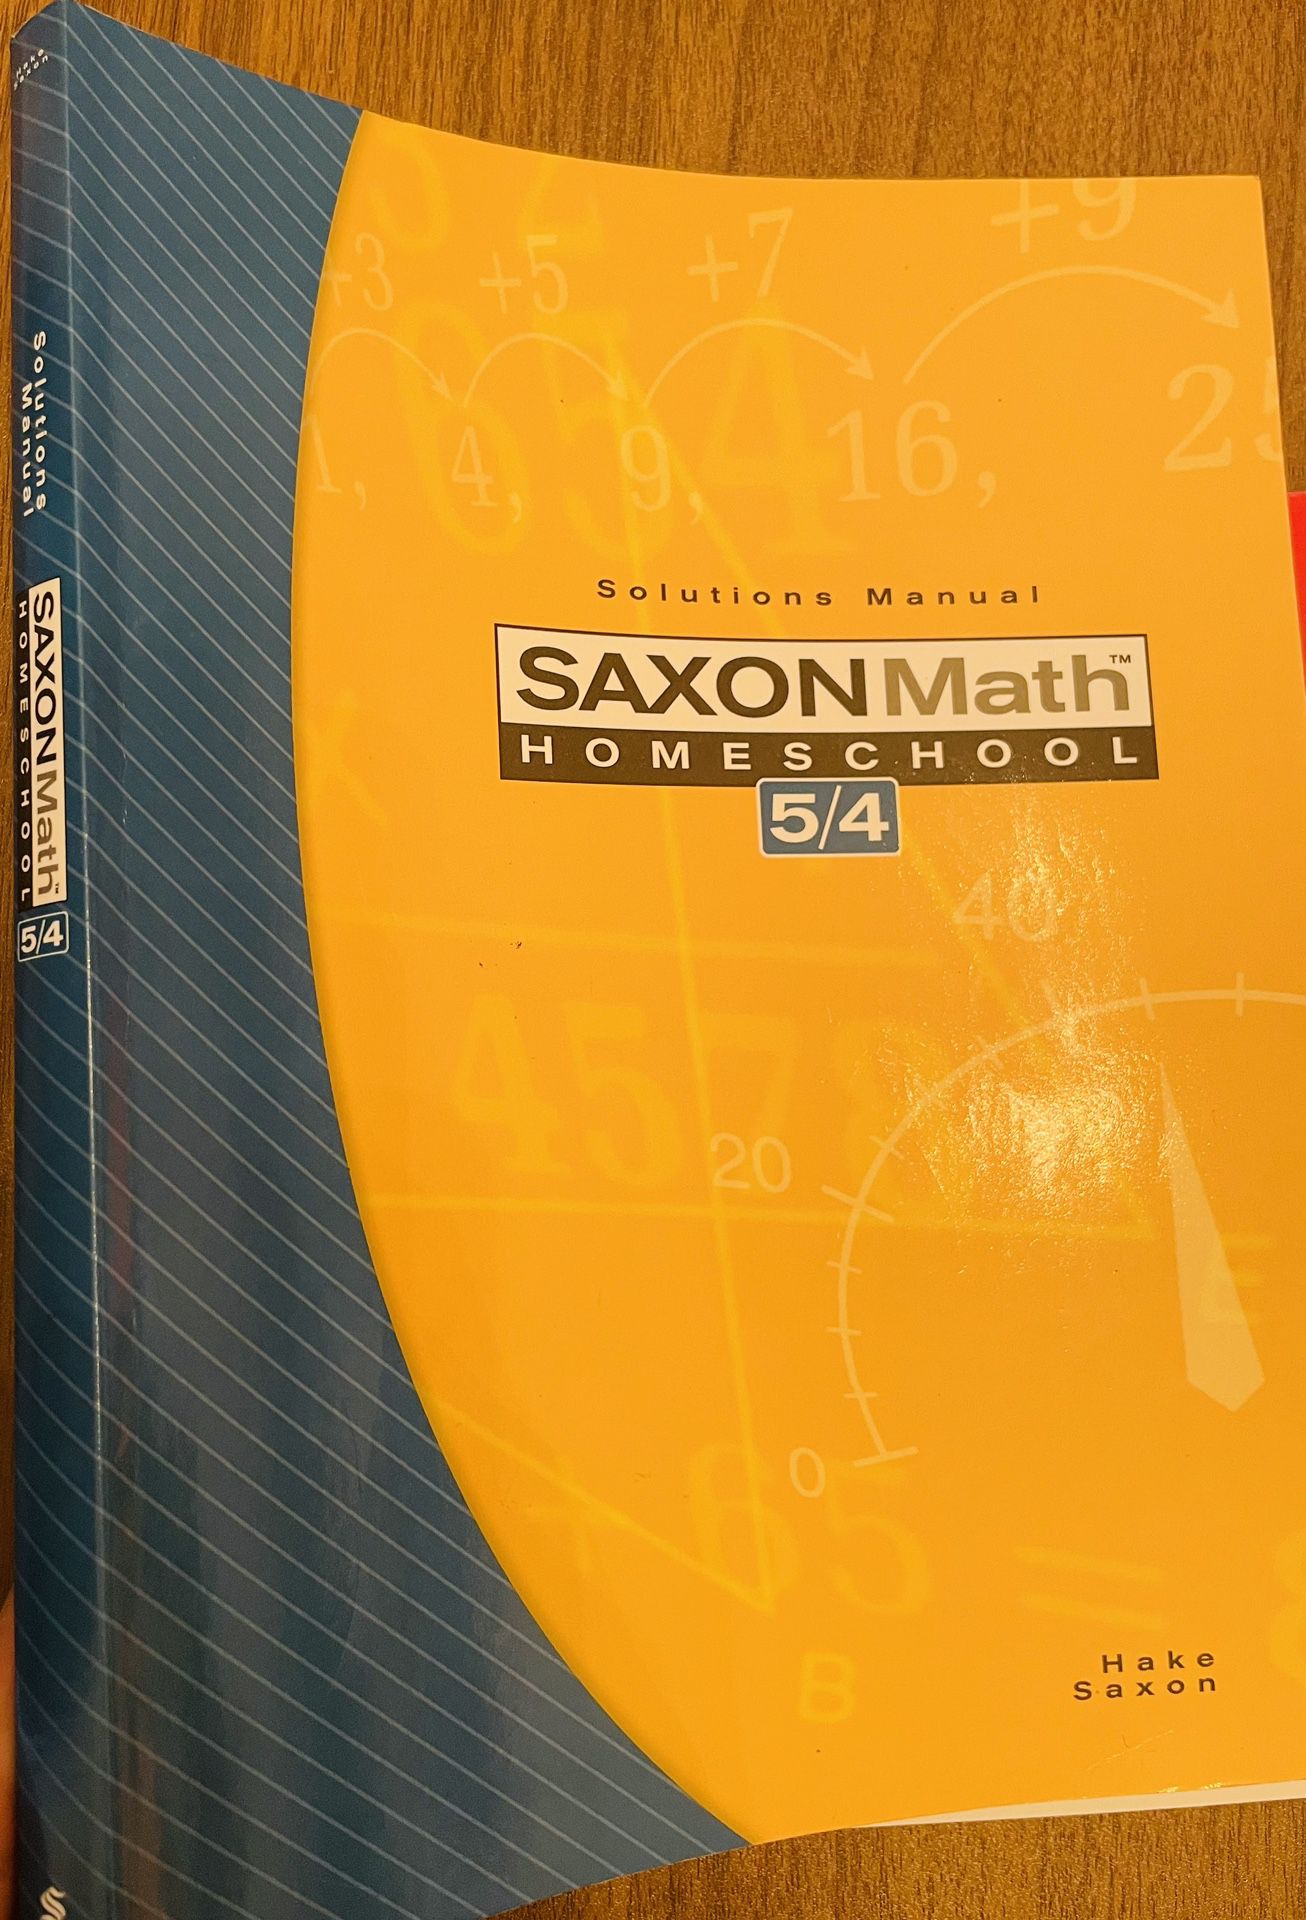 Saxon Math 5/4 Solutions Manual 